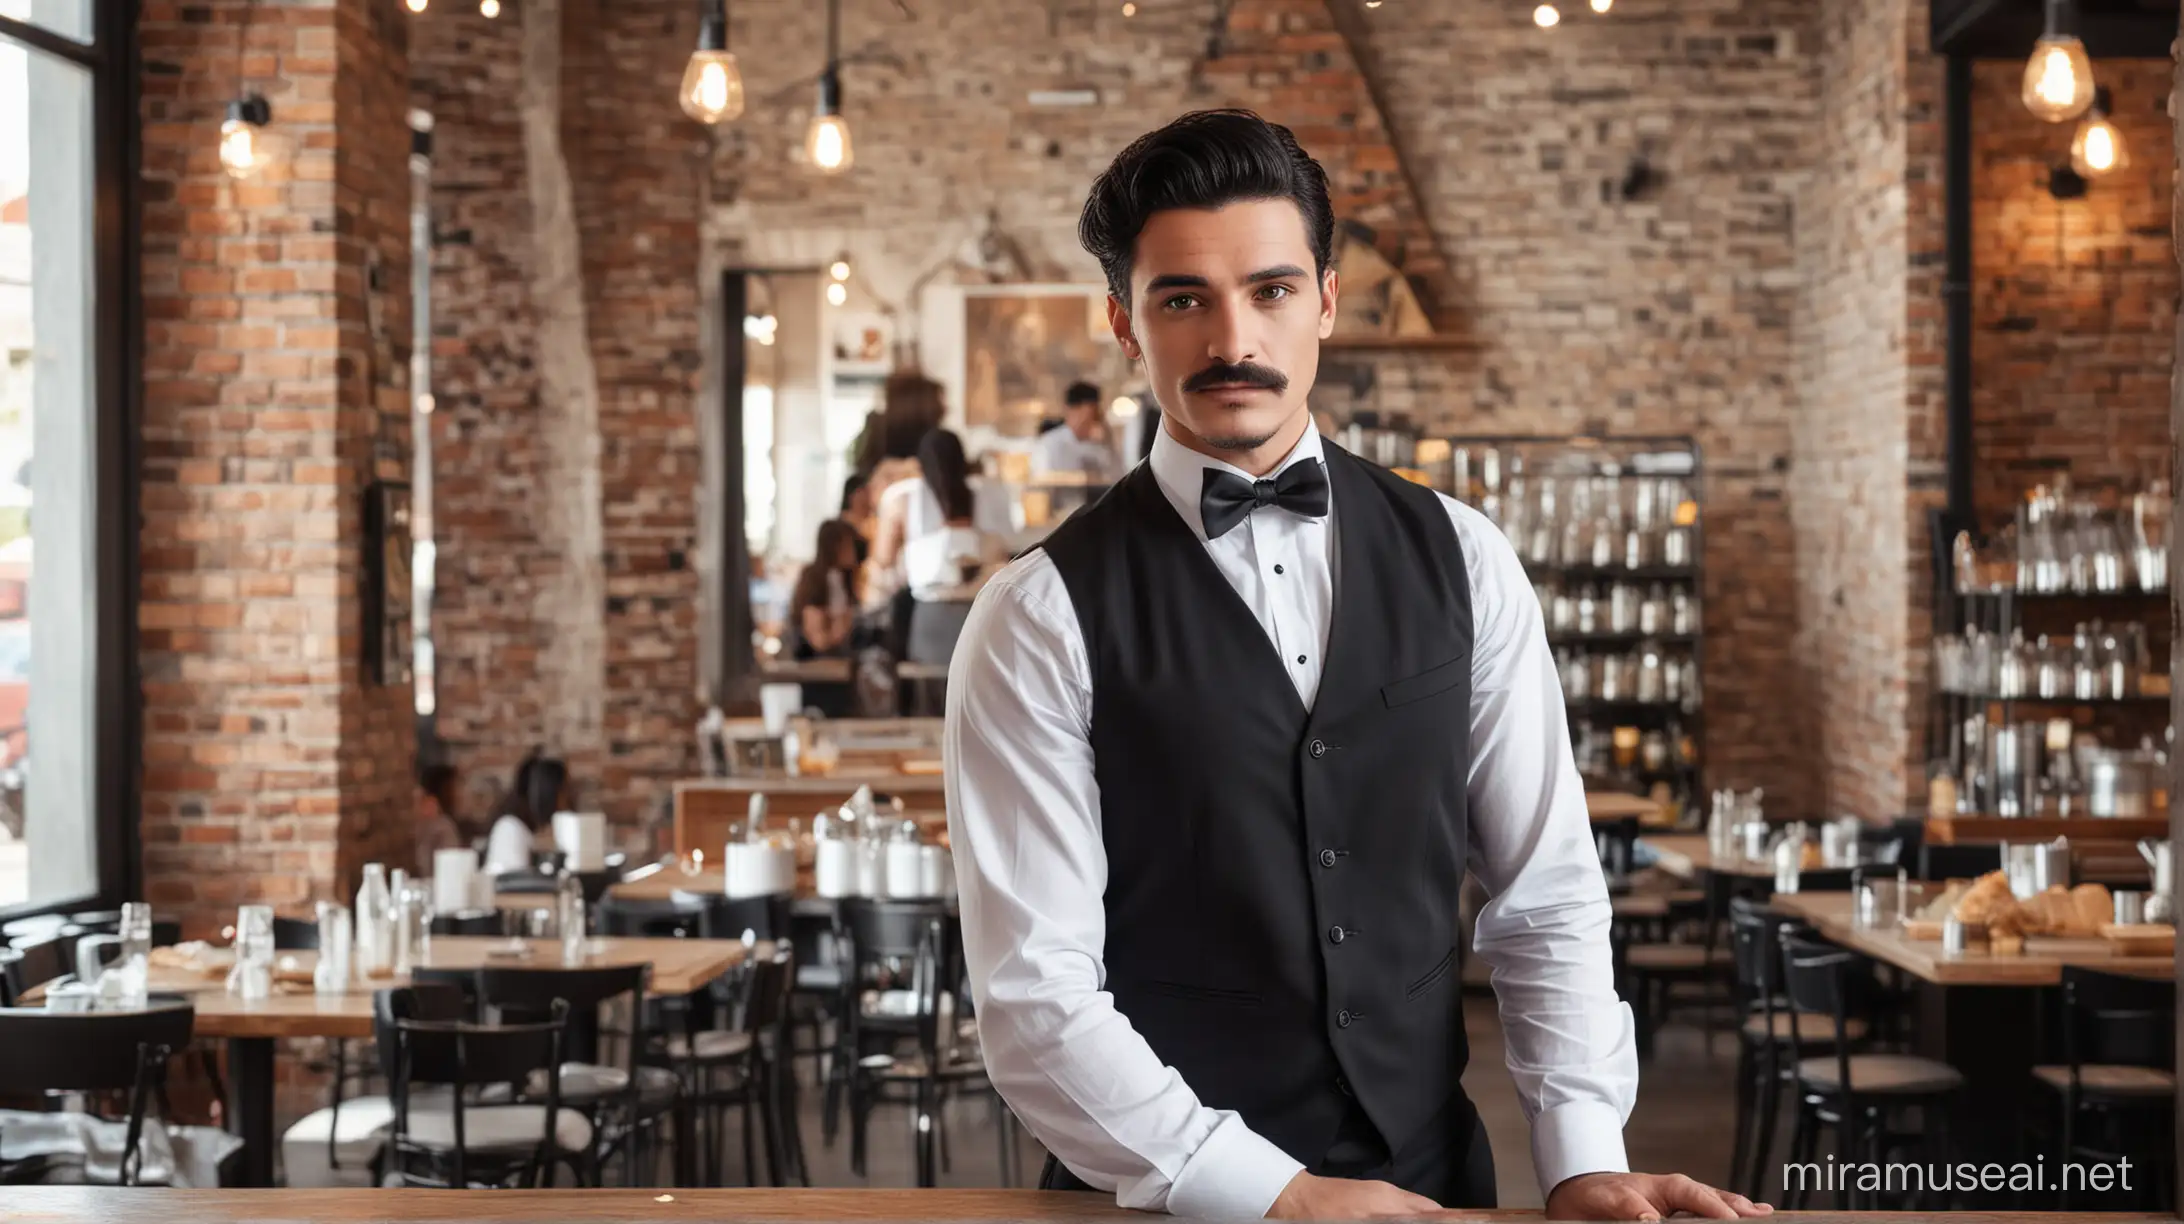 Urban Cafe Waiter with Pyramid Mustache in Black Attire